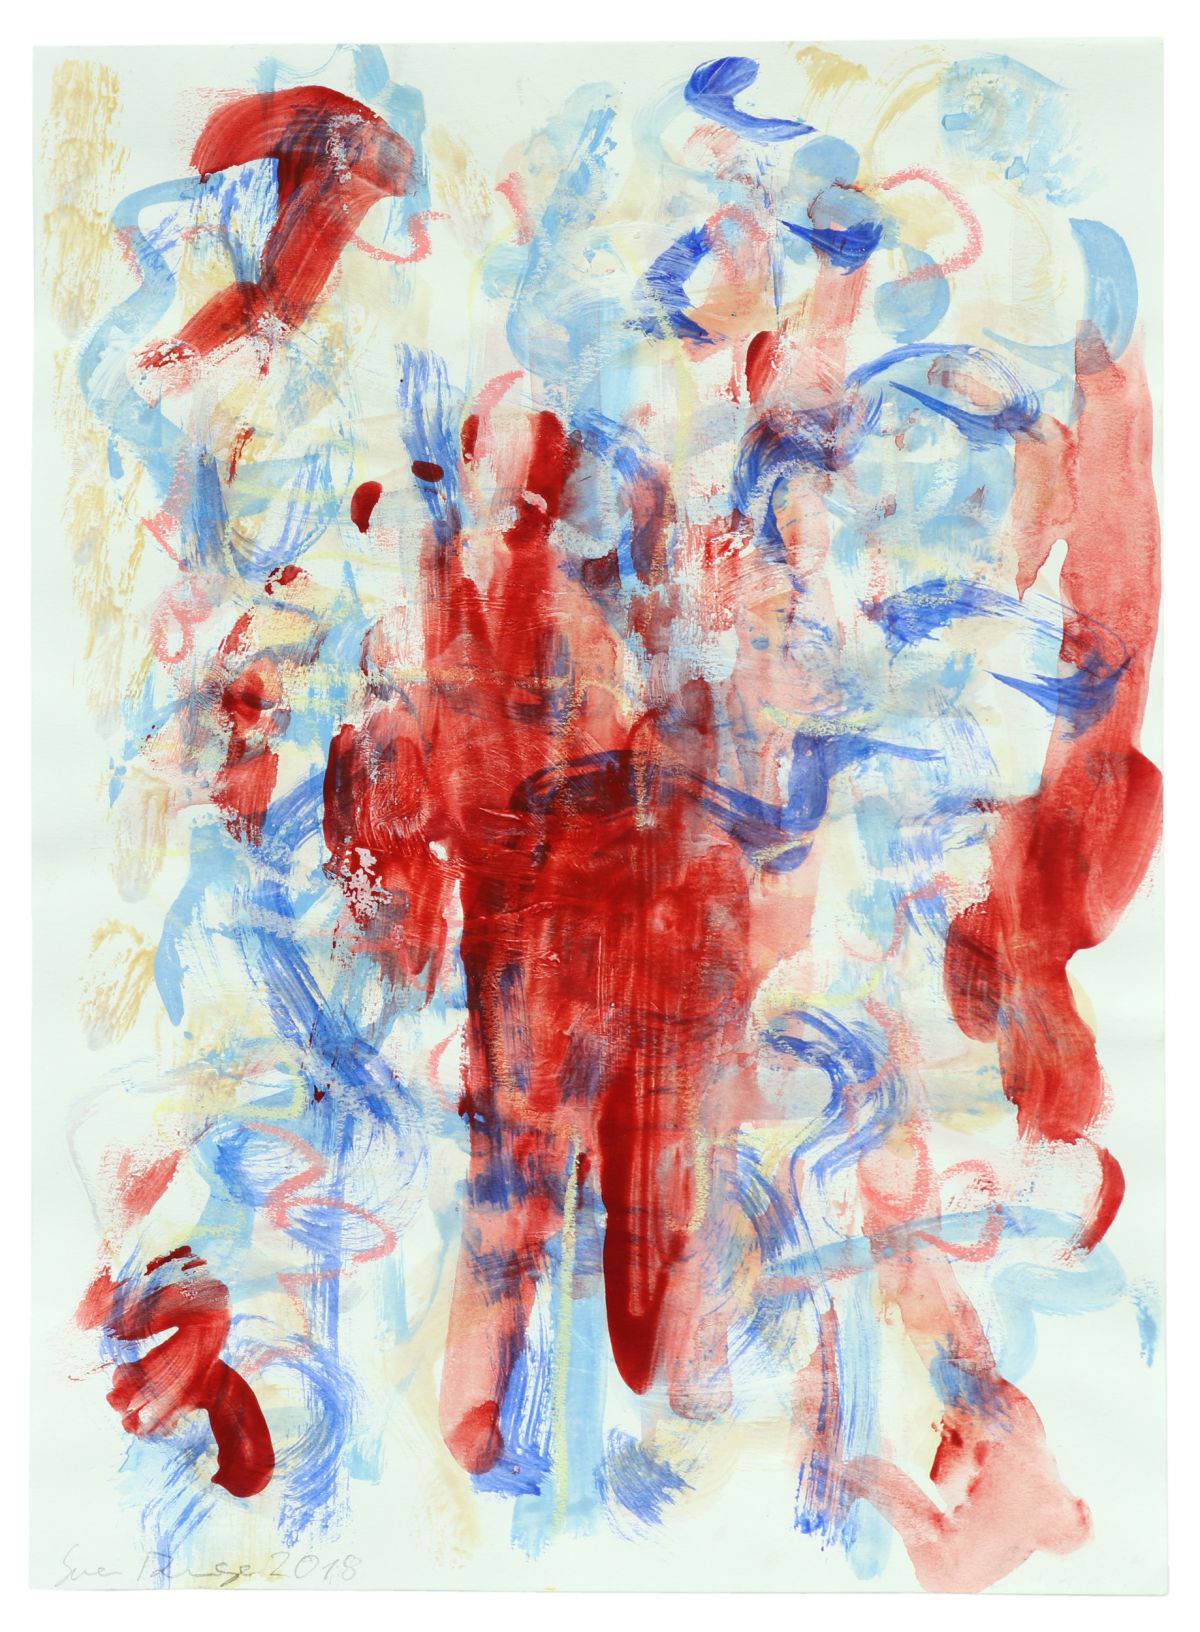 Roter Mensch in Bewegung, Tinte, Acryl auf Bütten, 30 cm x 20 cm